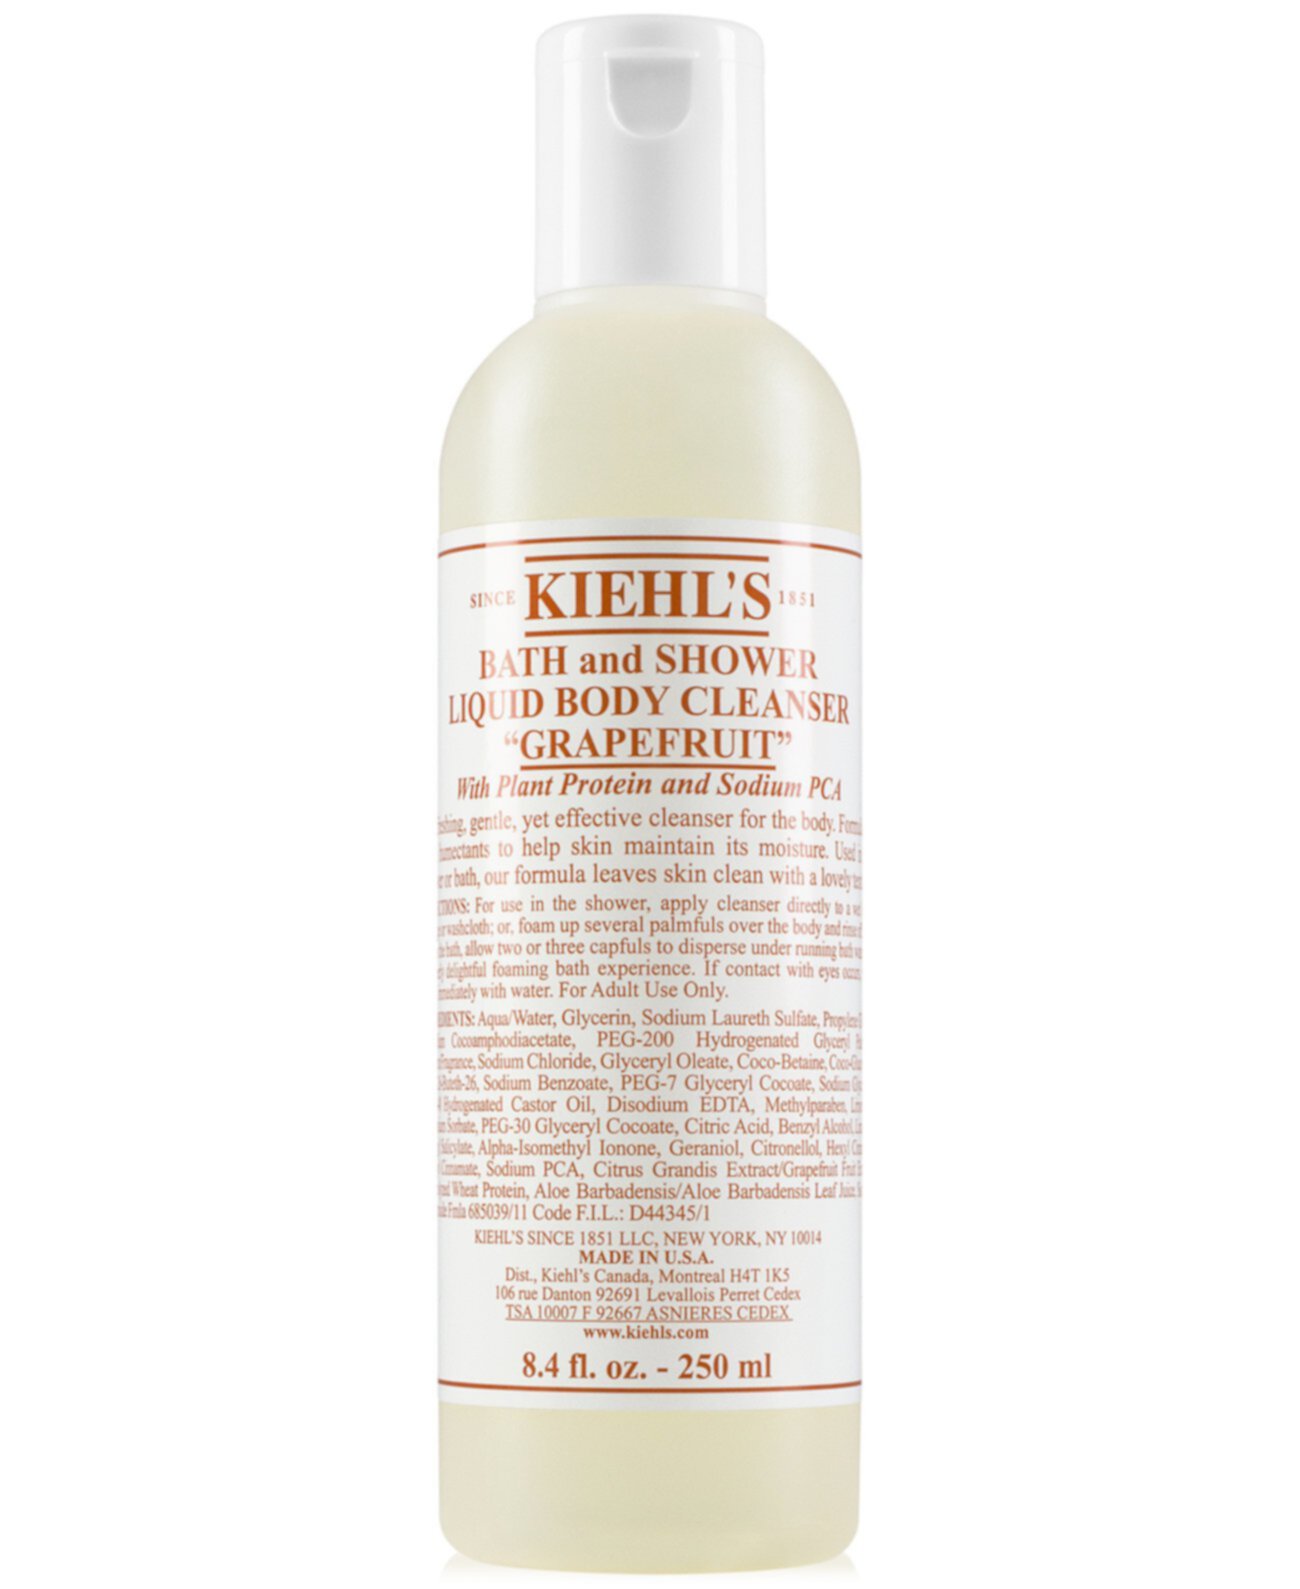 Bath & Shower Жидкое очищающее средство для тела - Грейпфрут, 8,4 унции. Kiehl's Since 1851